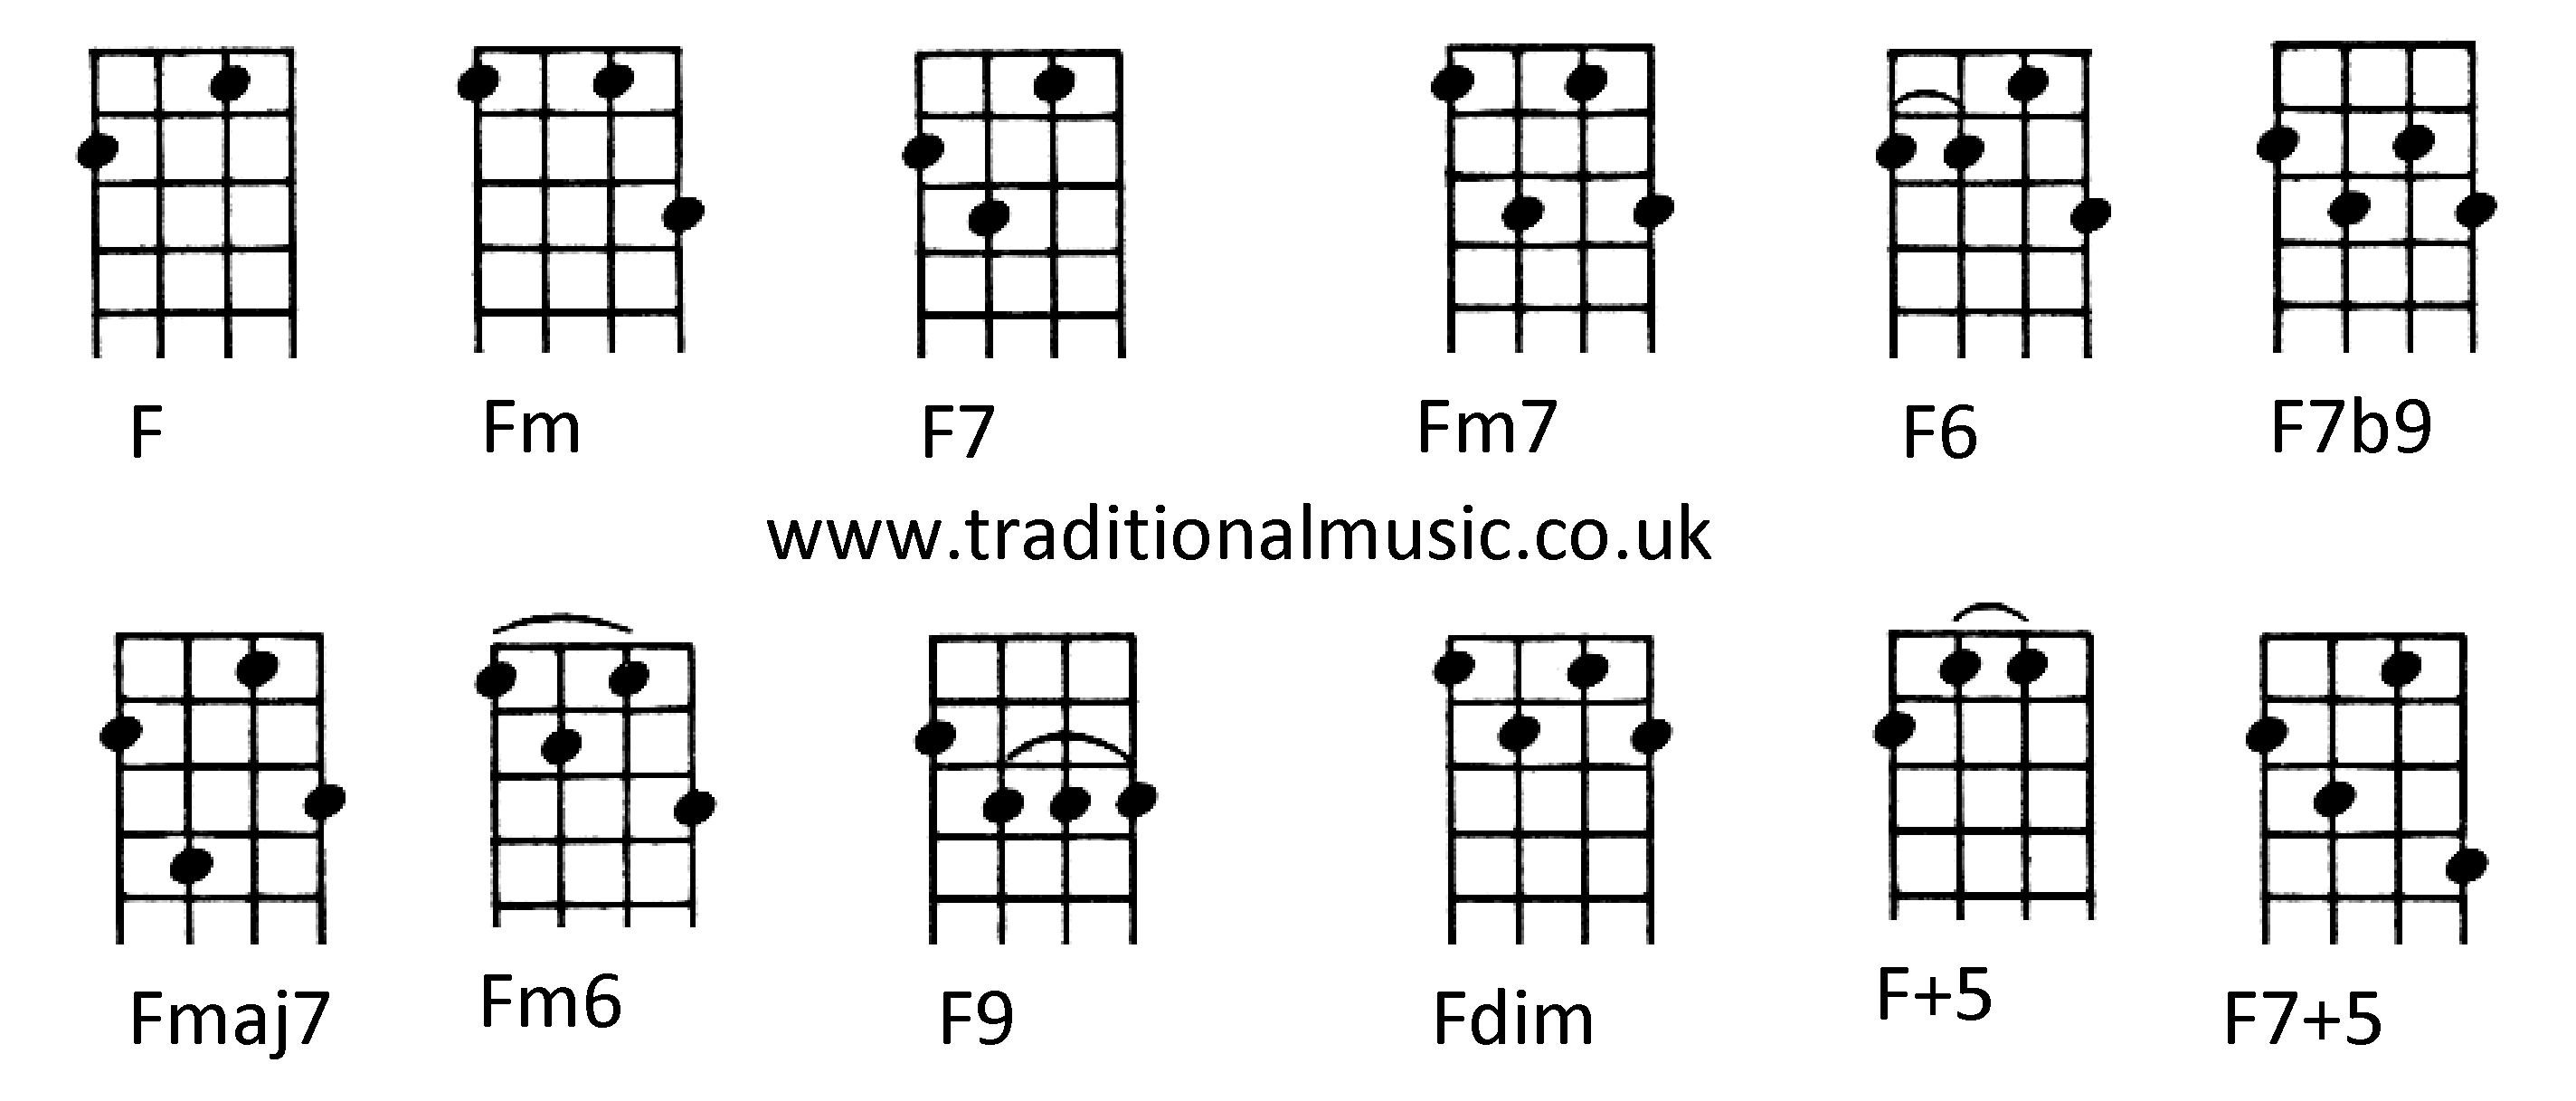 Chords for Ukulele (C tuning) F Fm F7 Fm7 F6 F7b9 Fmaj7 Fm6 F9 Fdim F+5 F7+5